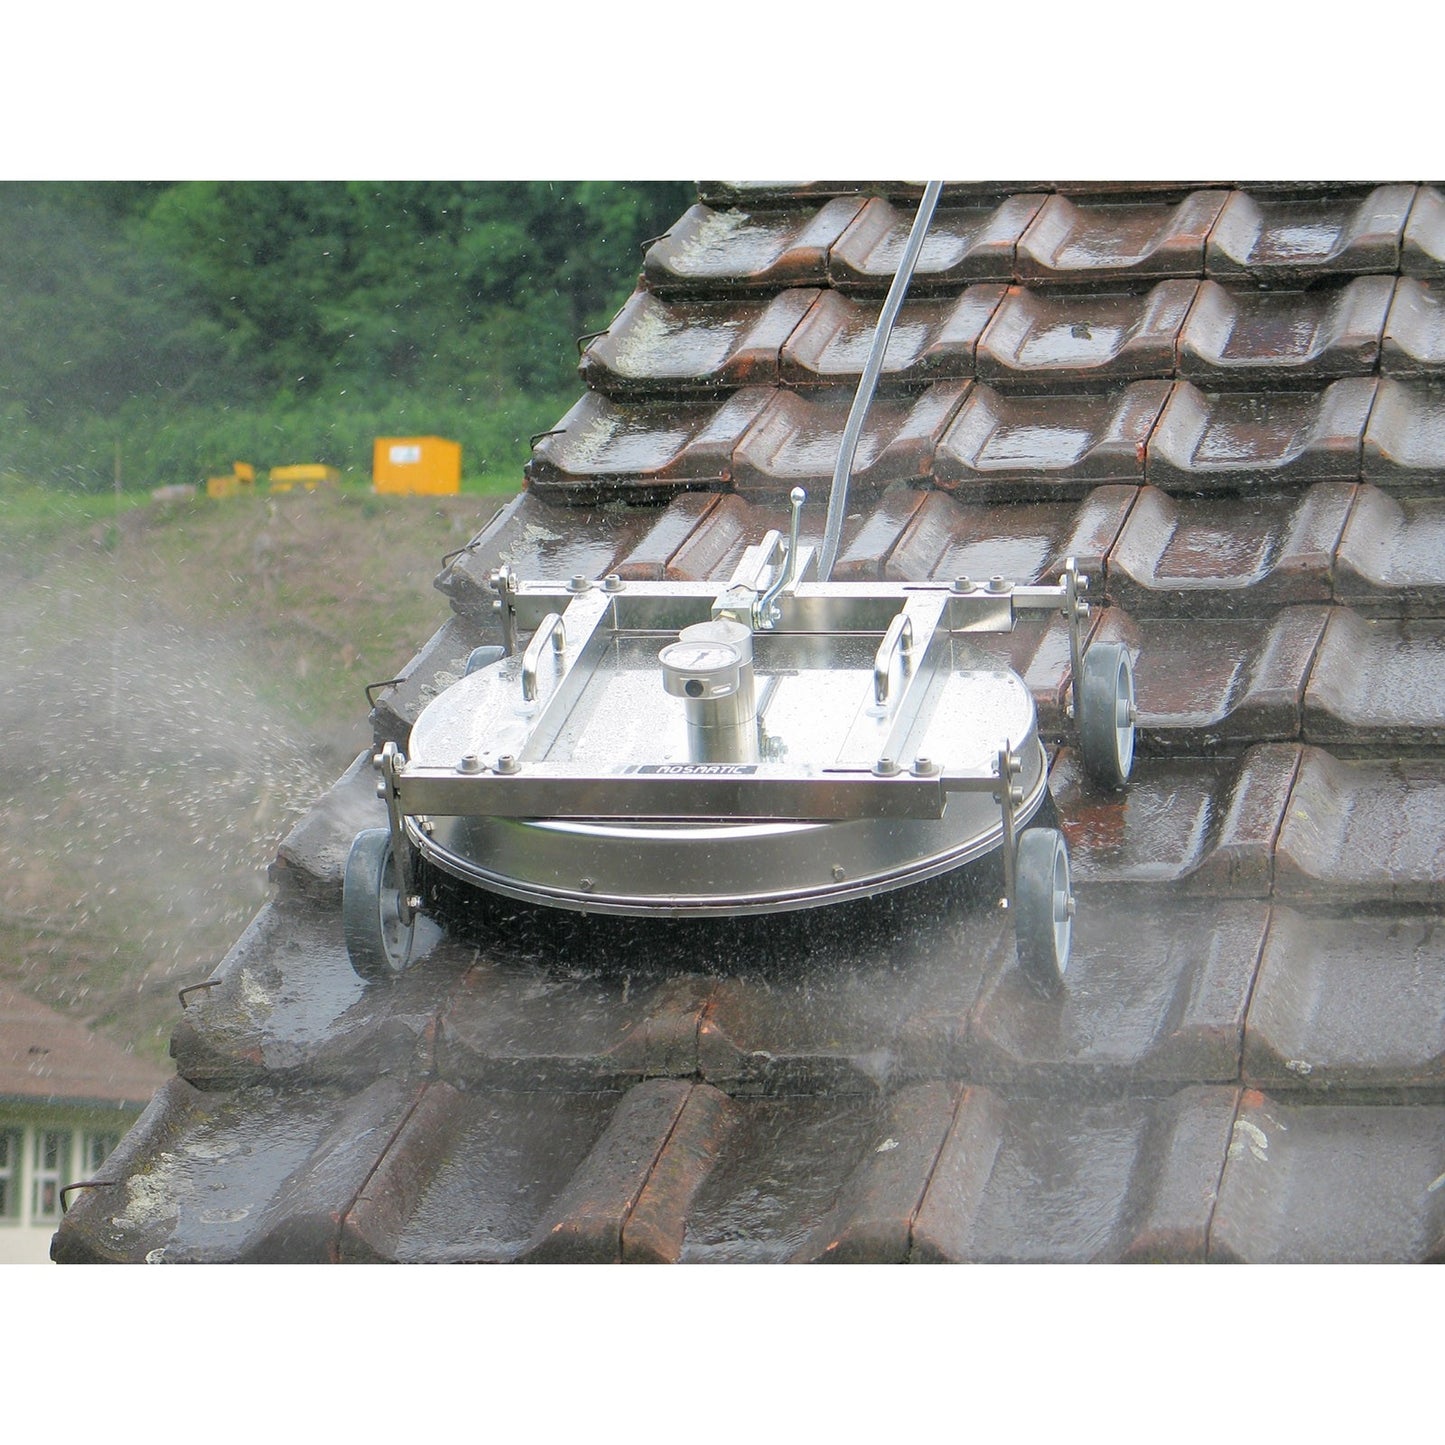 Mosmatic Roof Cleaner 520mm